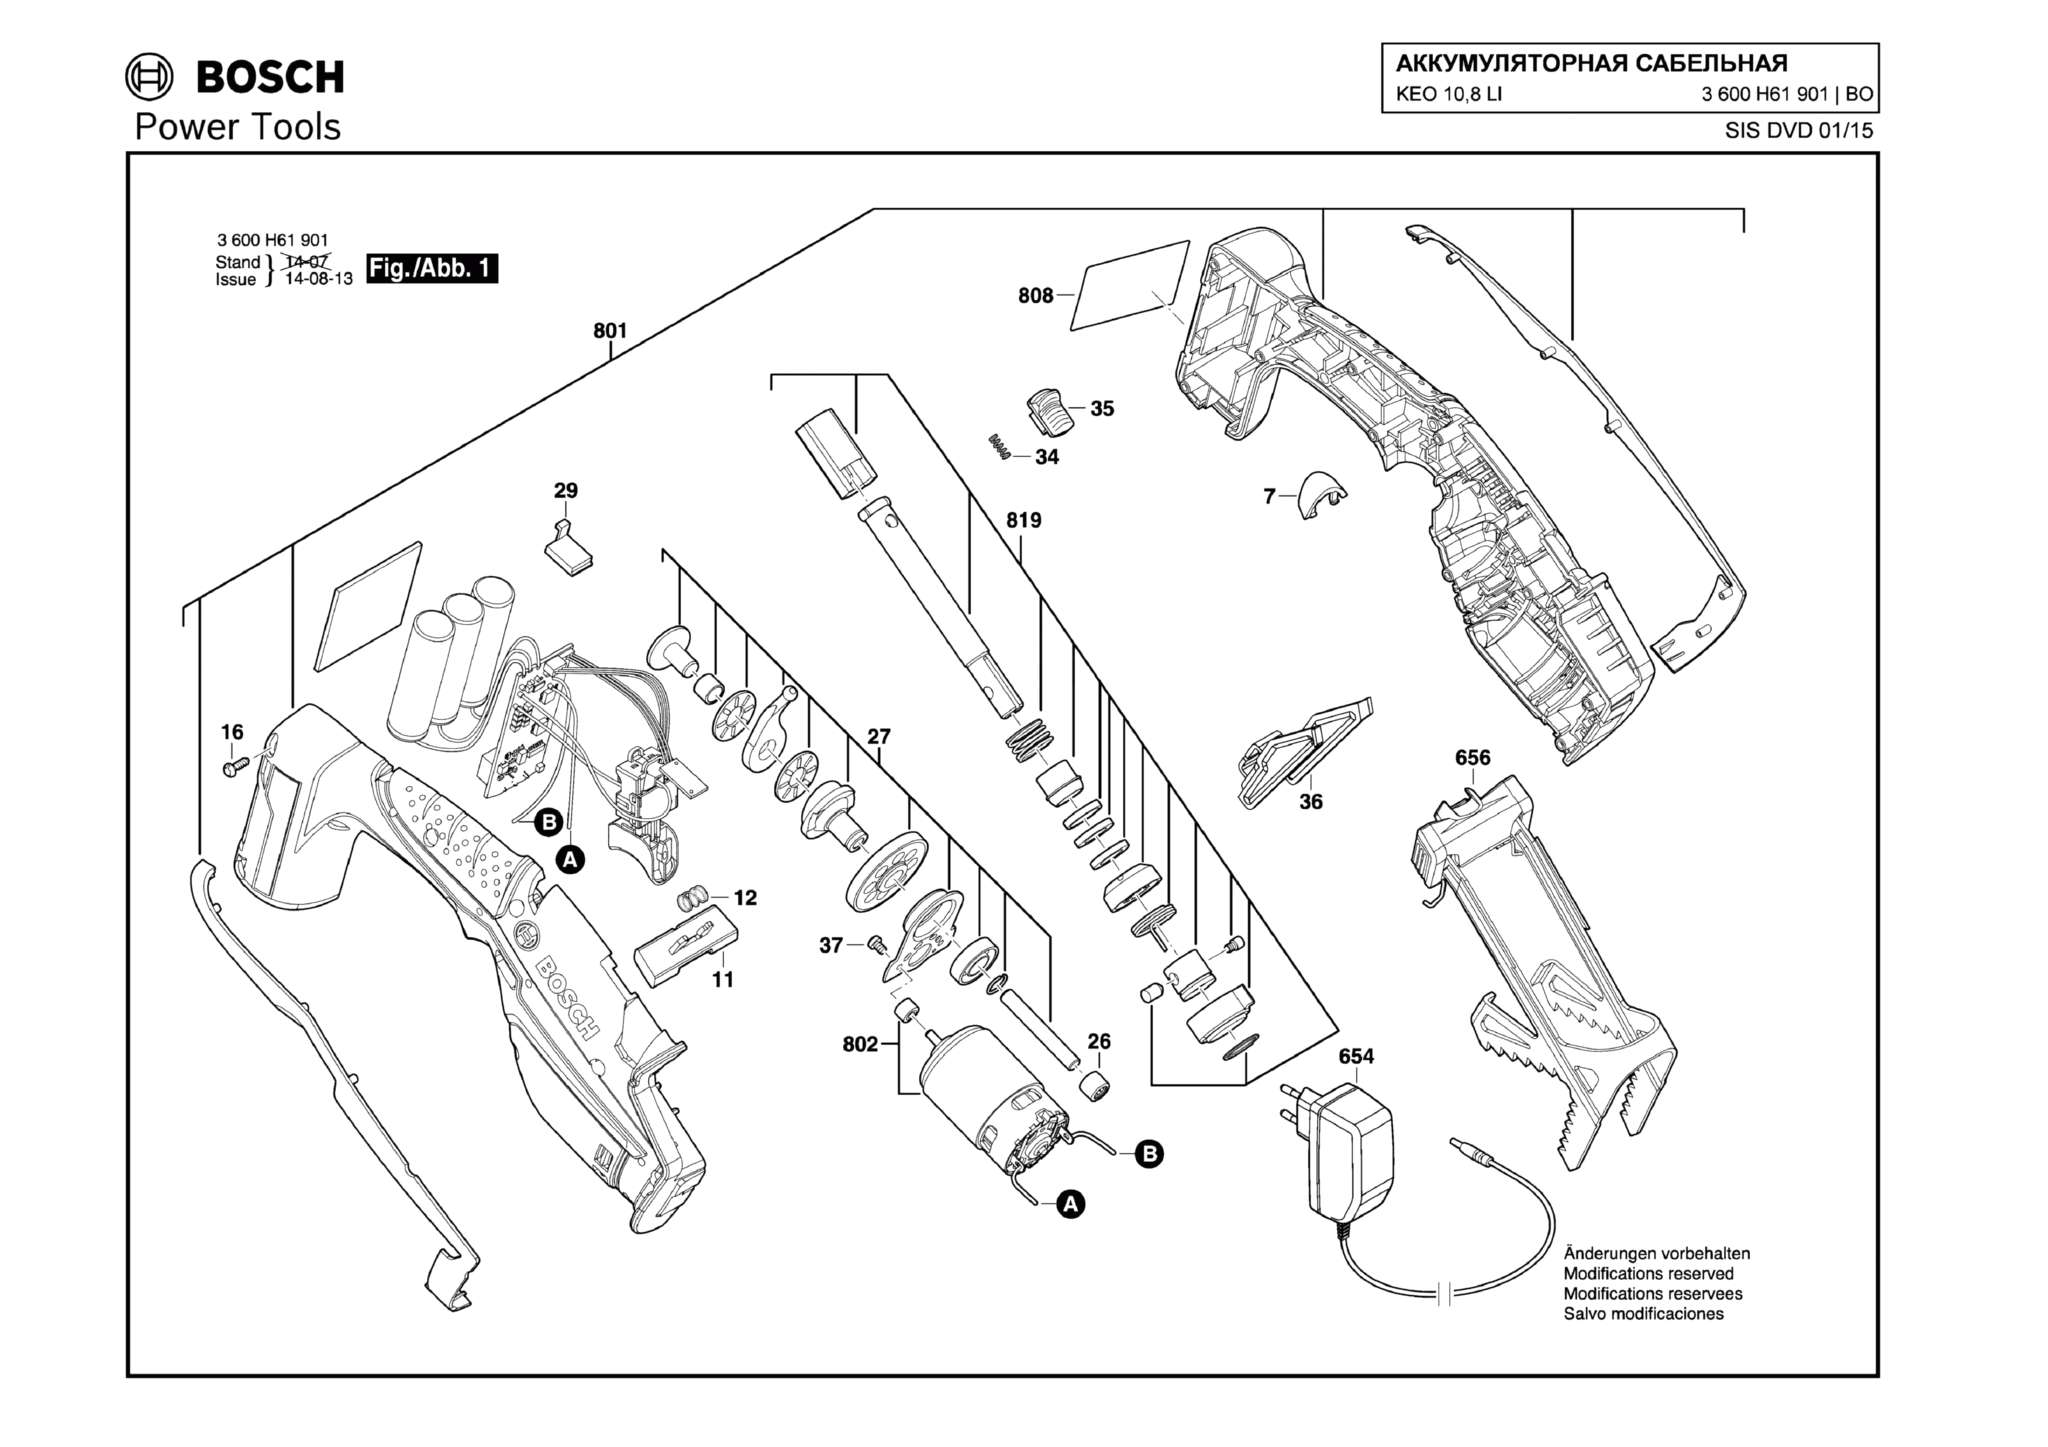 Запчасти, схема и деталировка Bosch KEO 10,8 LI (ТИП 3600H61901)